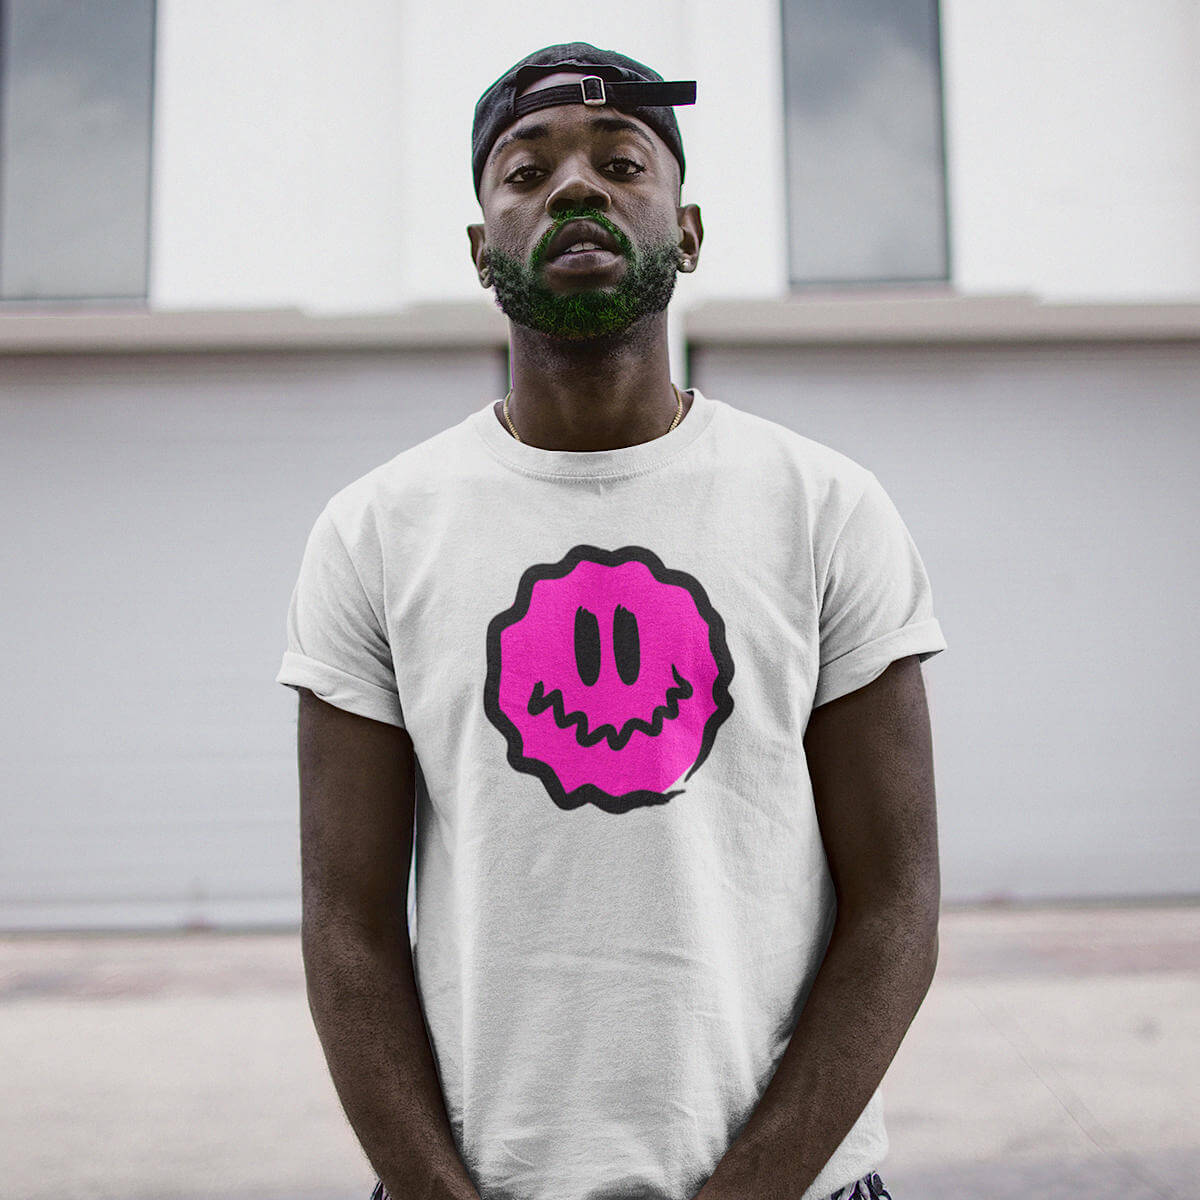 man wearing pink-antsy-face-t-shirt